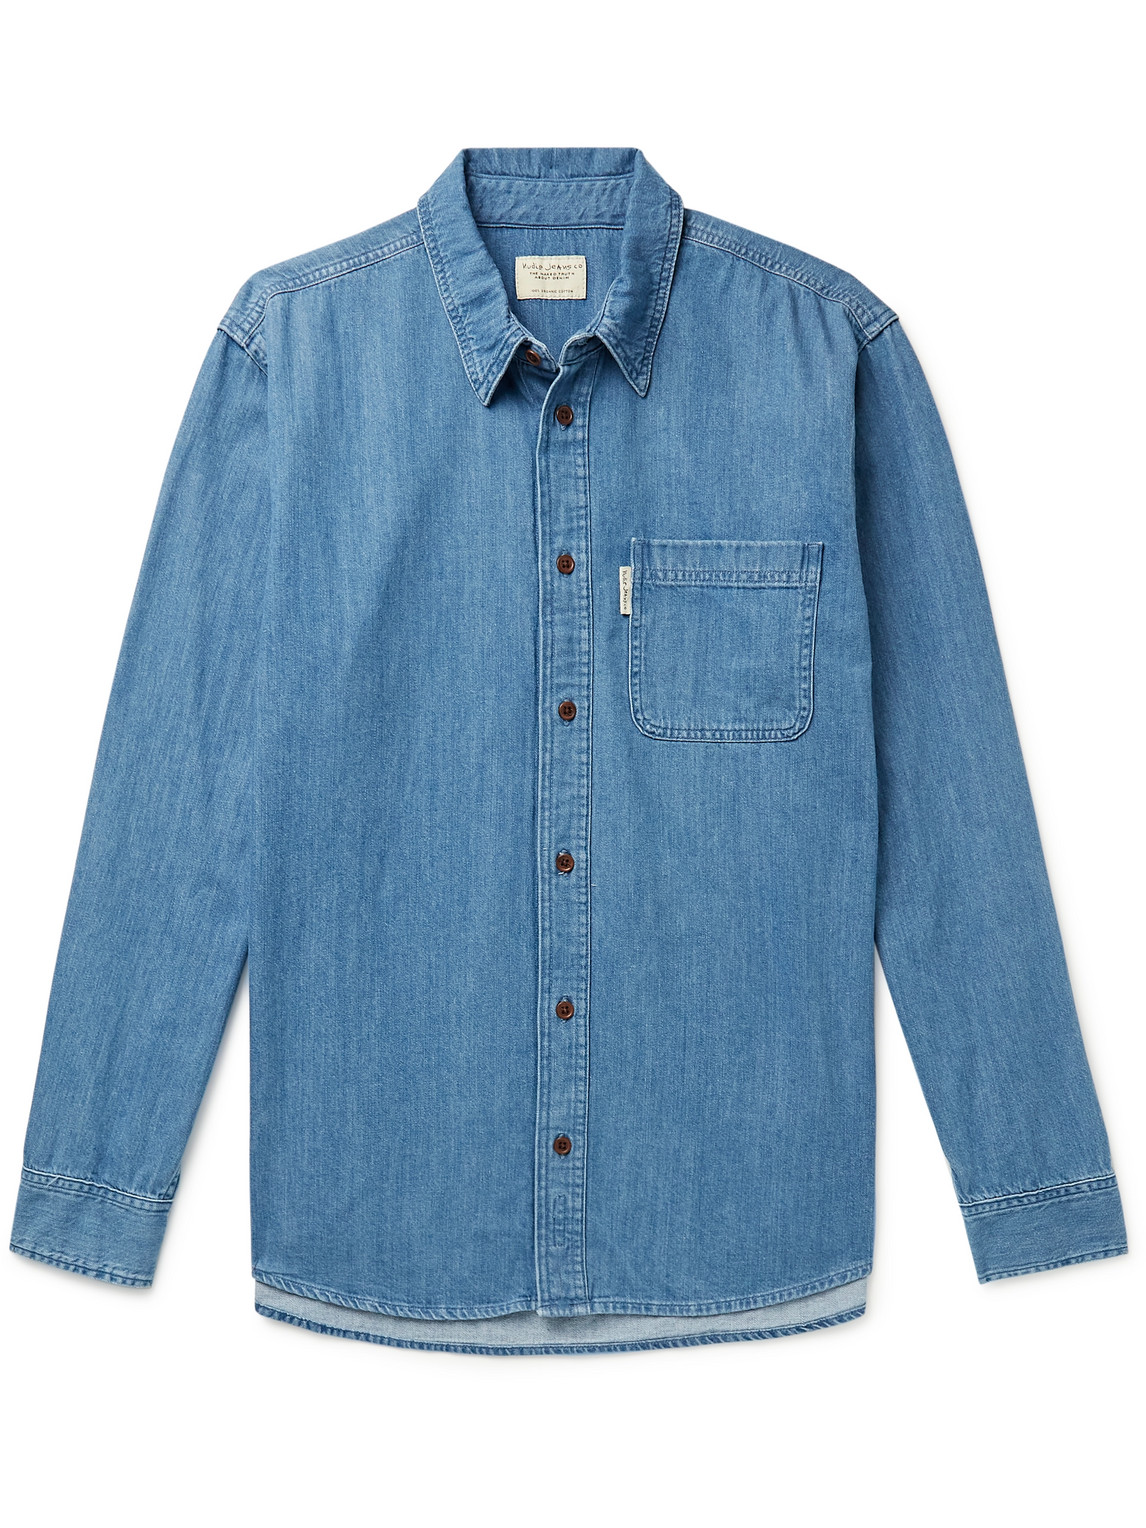 nudie jeans - hebbe humble organic denim shirt - men - blue - xs